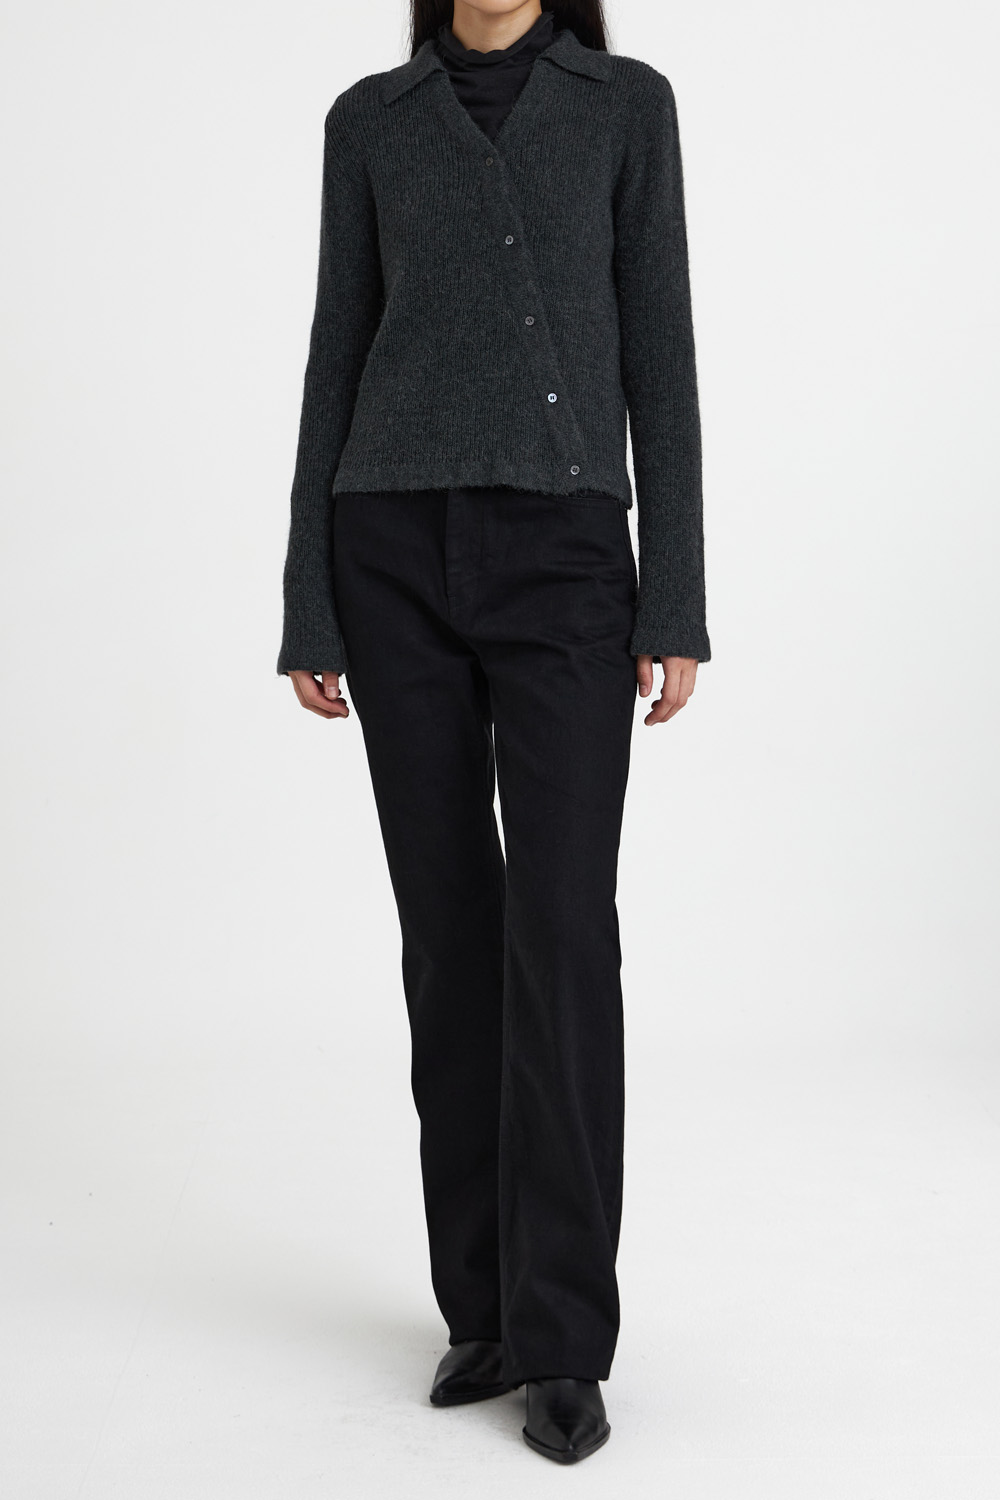 Asymmetric Knit Shirt - Charcoal Grey